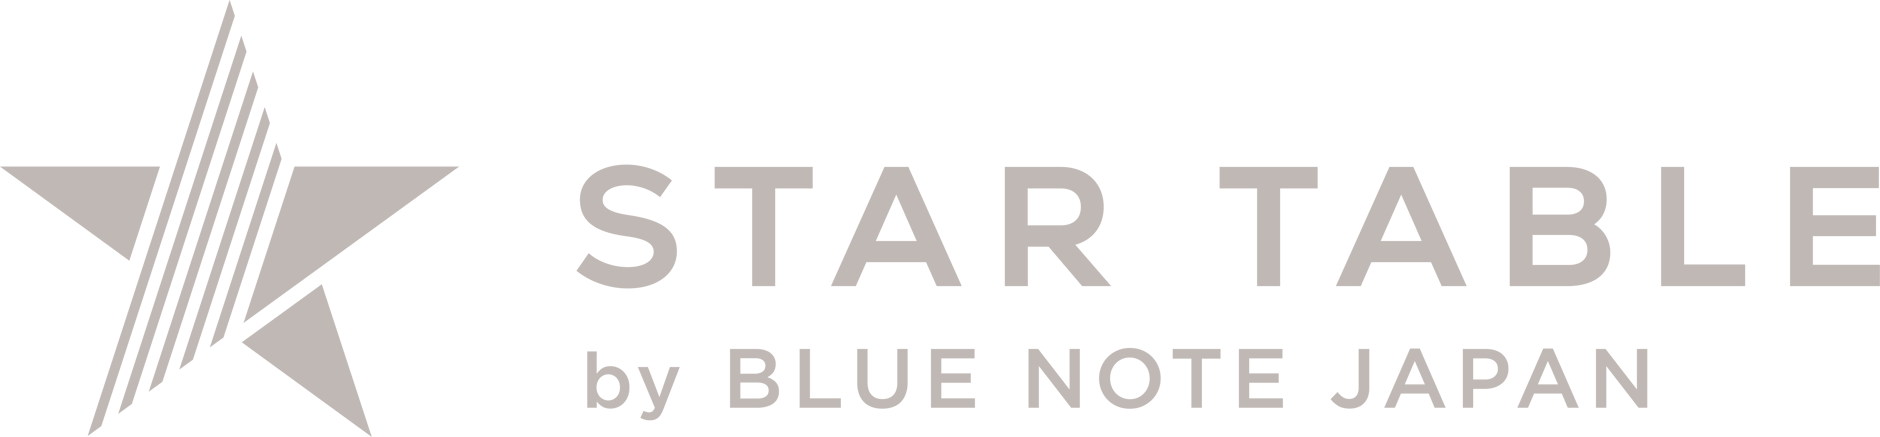 STAR TABLE